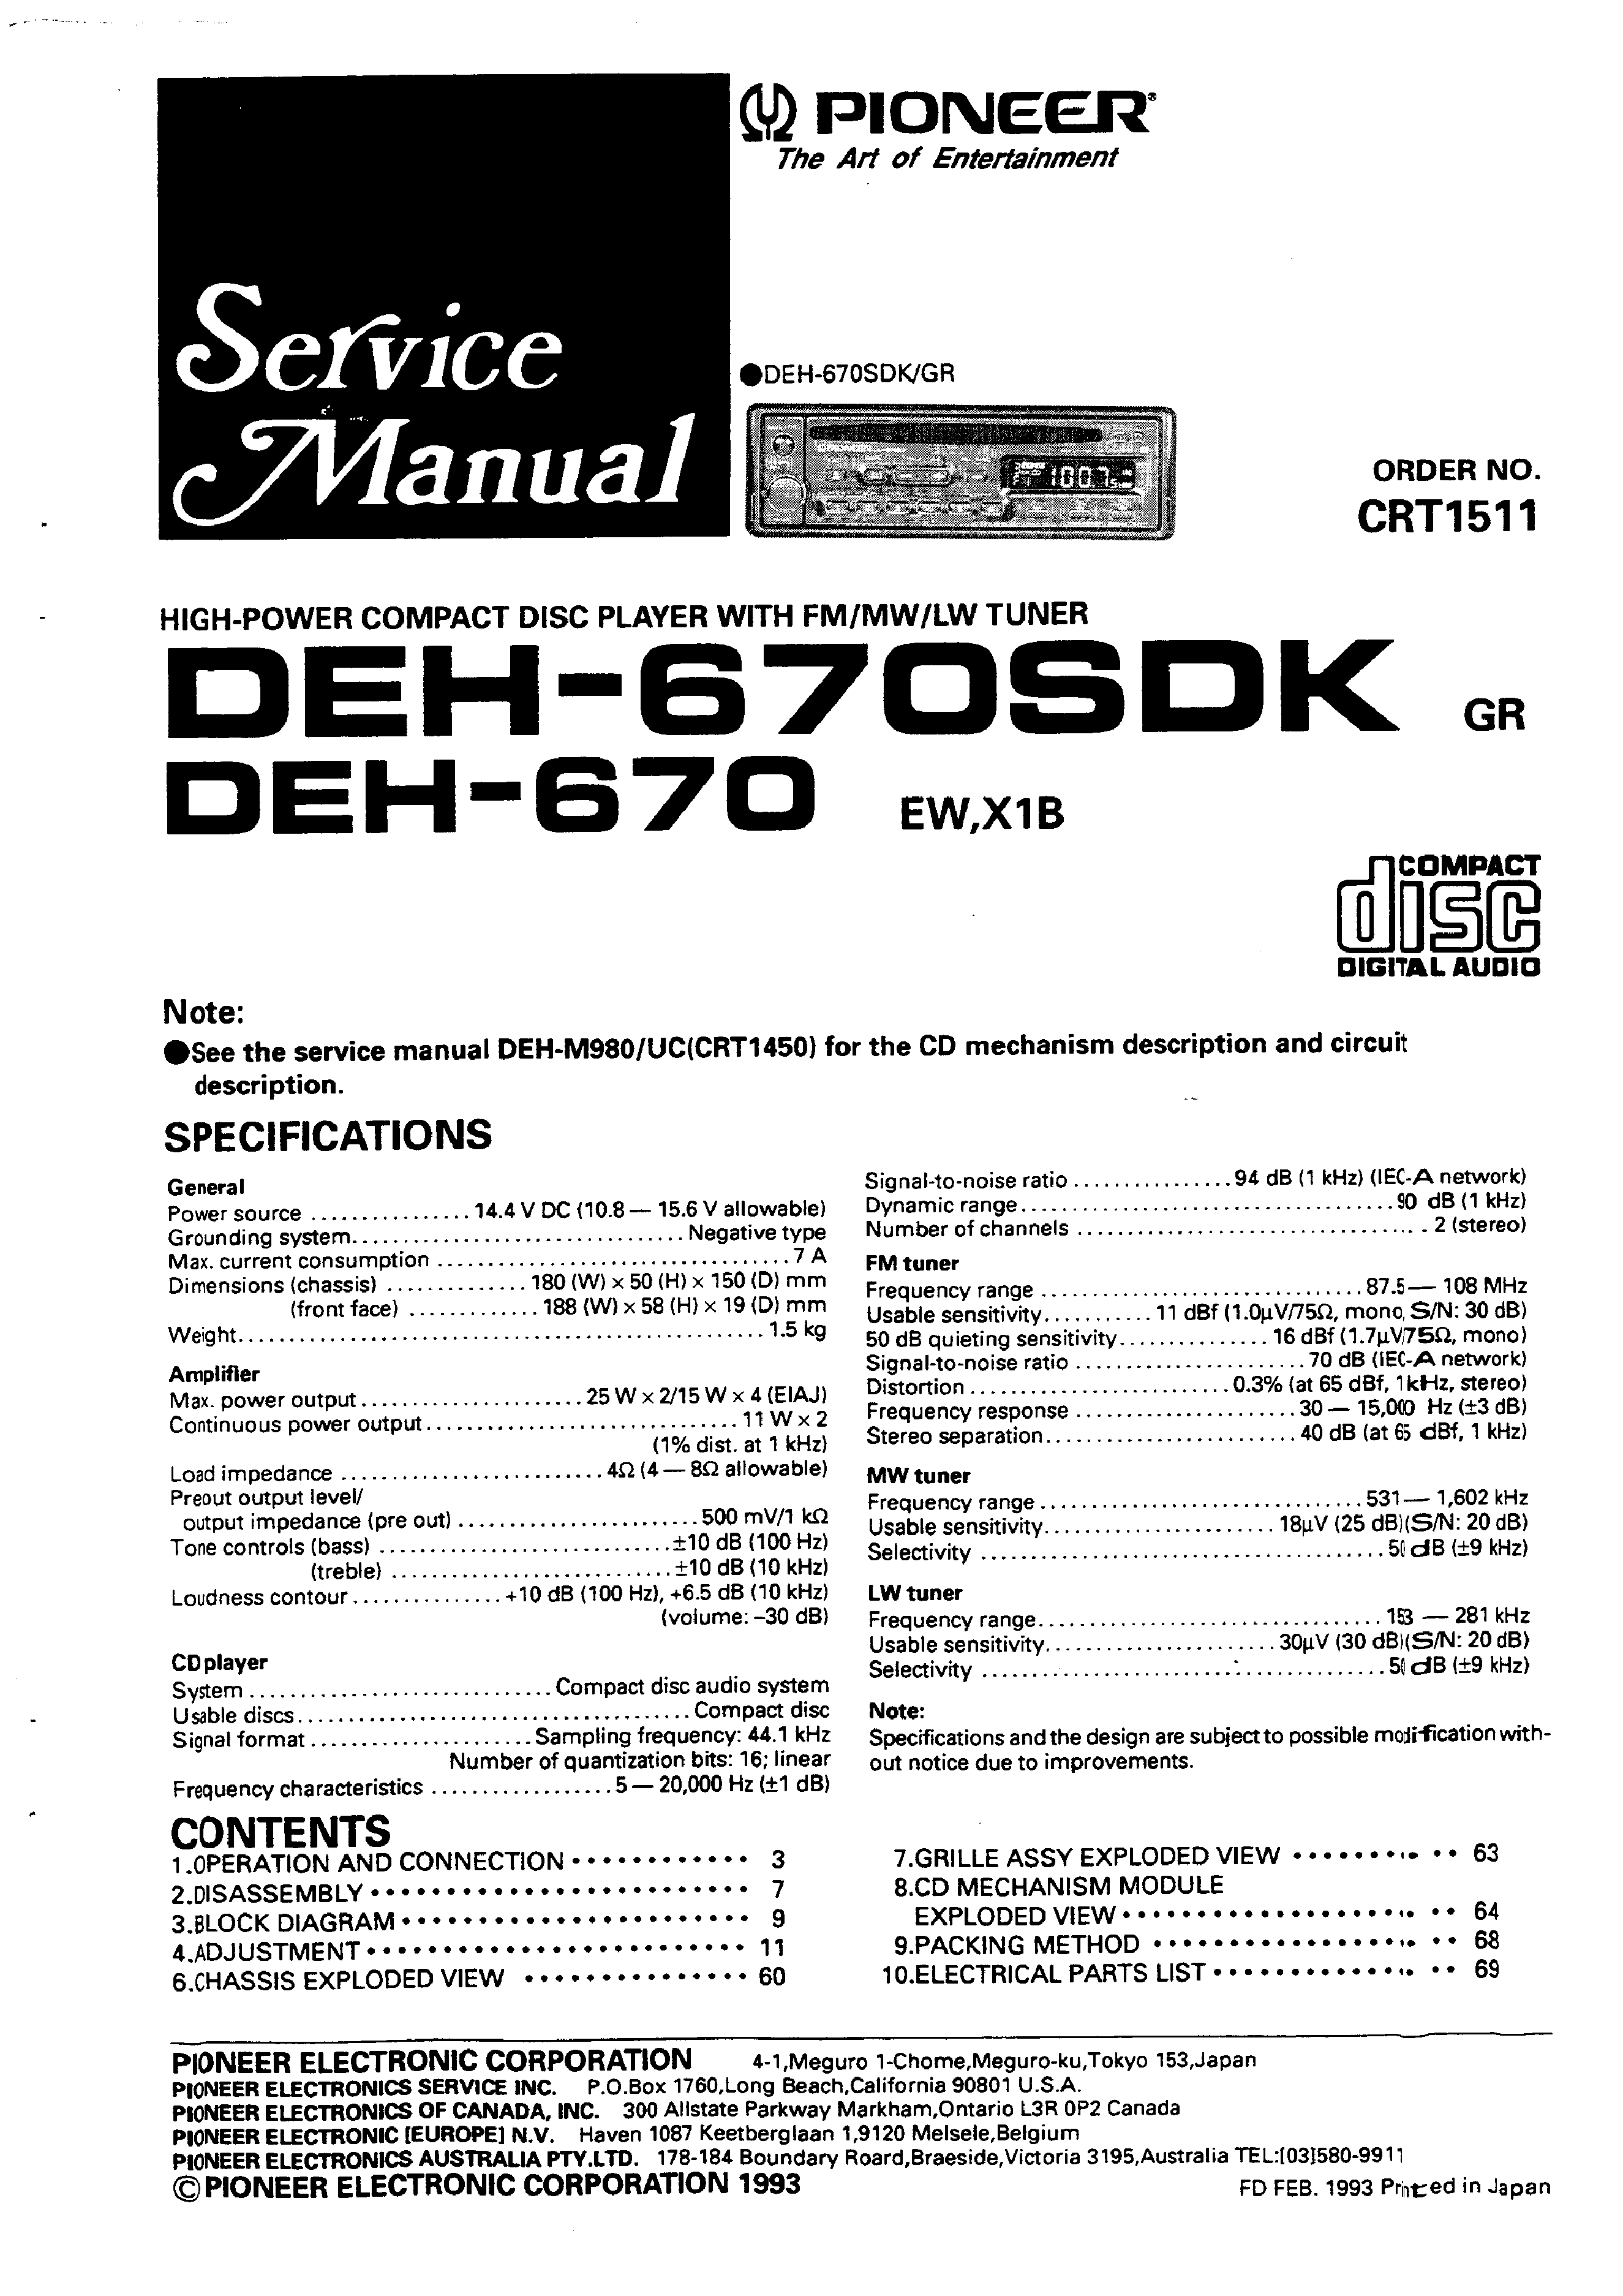 Service Manual for PIONEER DEH670/SDK - Download